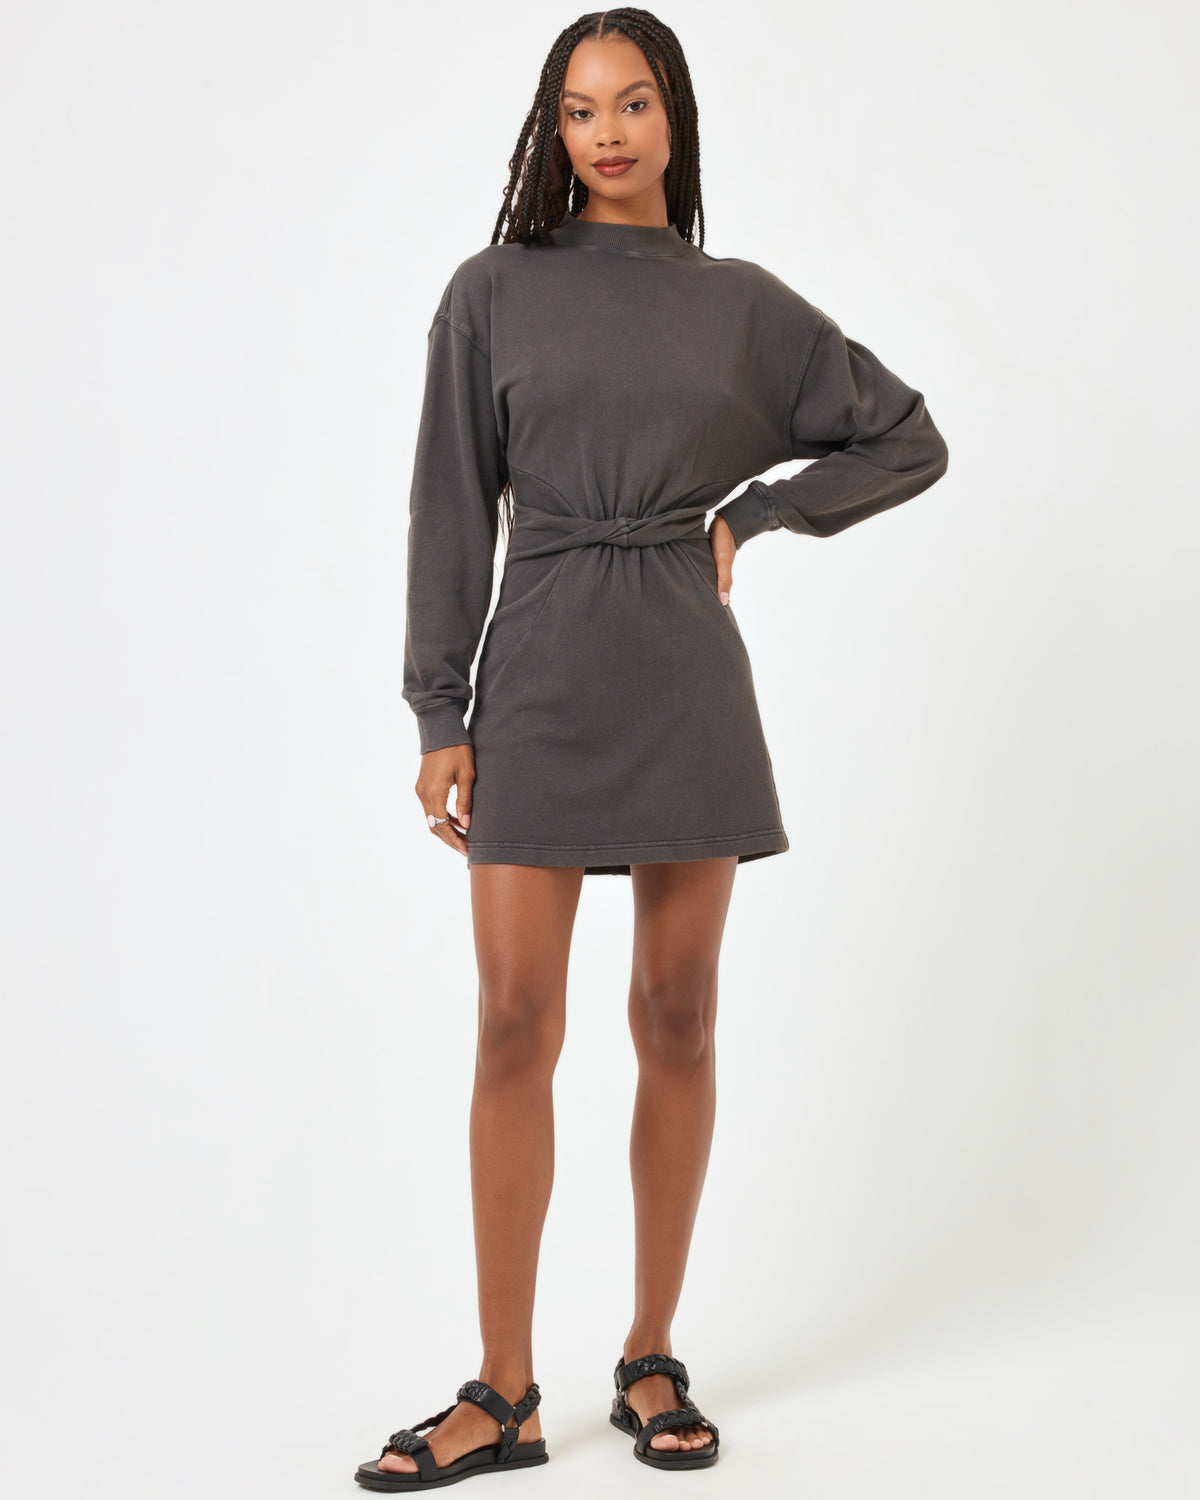 Asher Dress - Ash Ash | Model: Taelor (size: S)